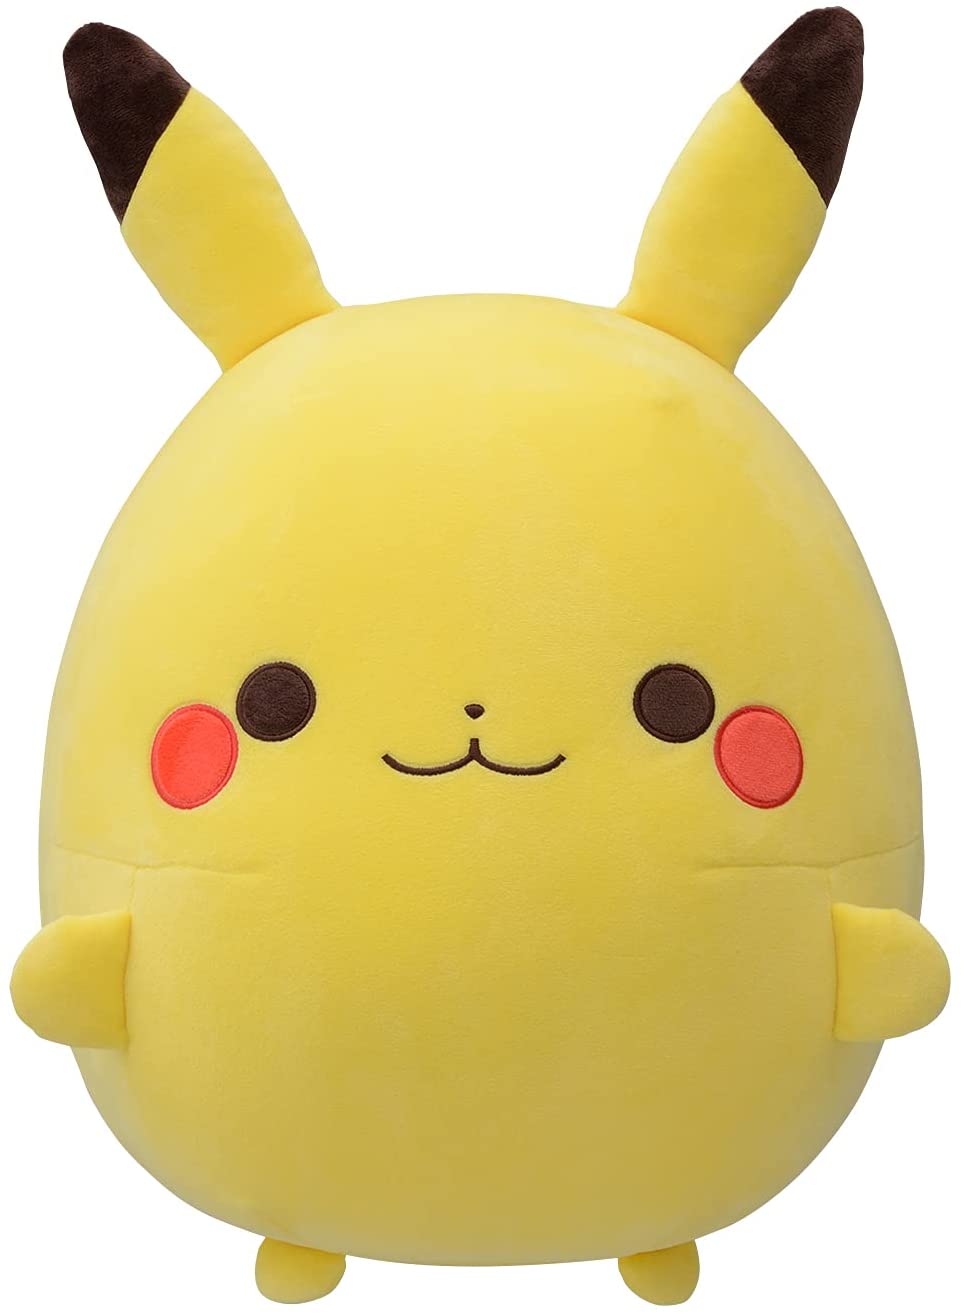 Pokemon Electric Charge Pikachu Plush : Target